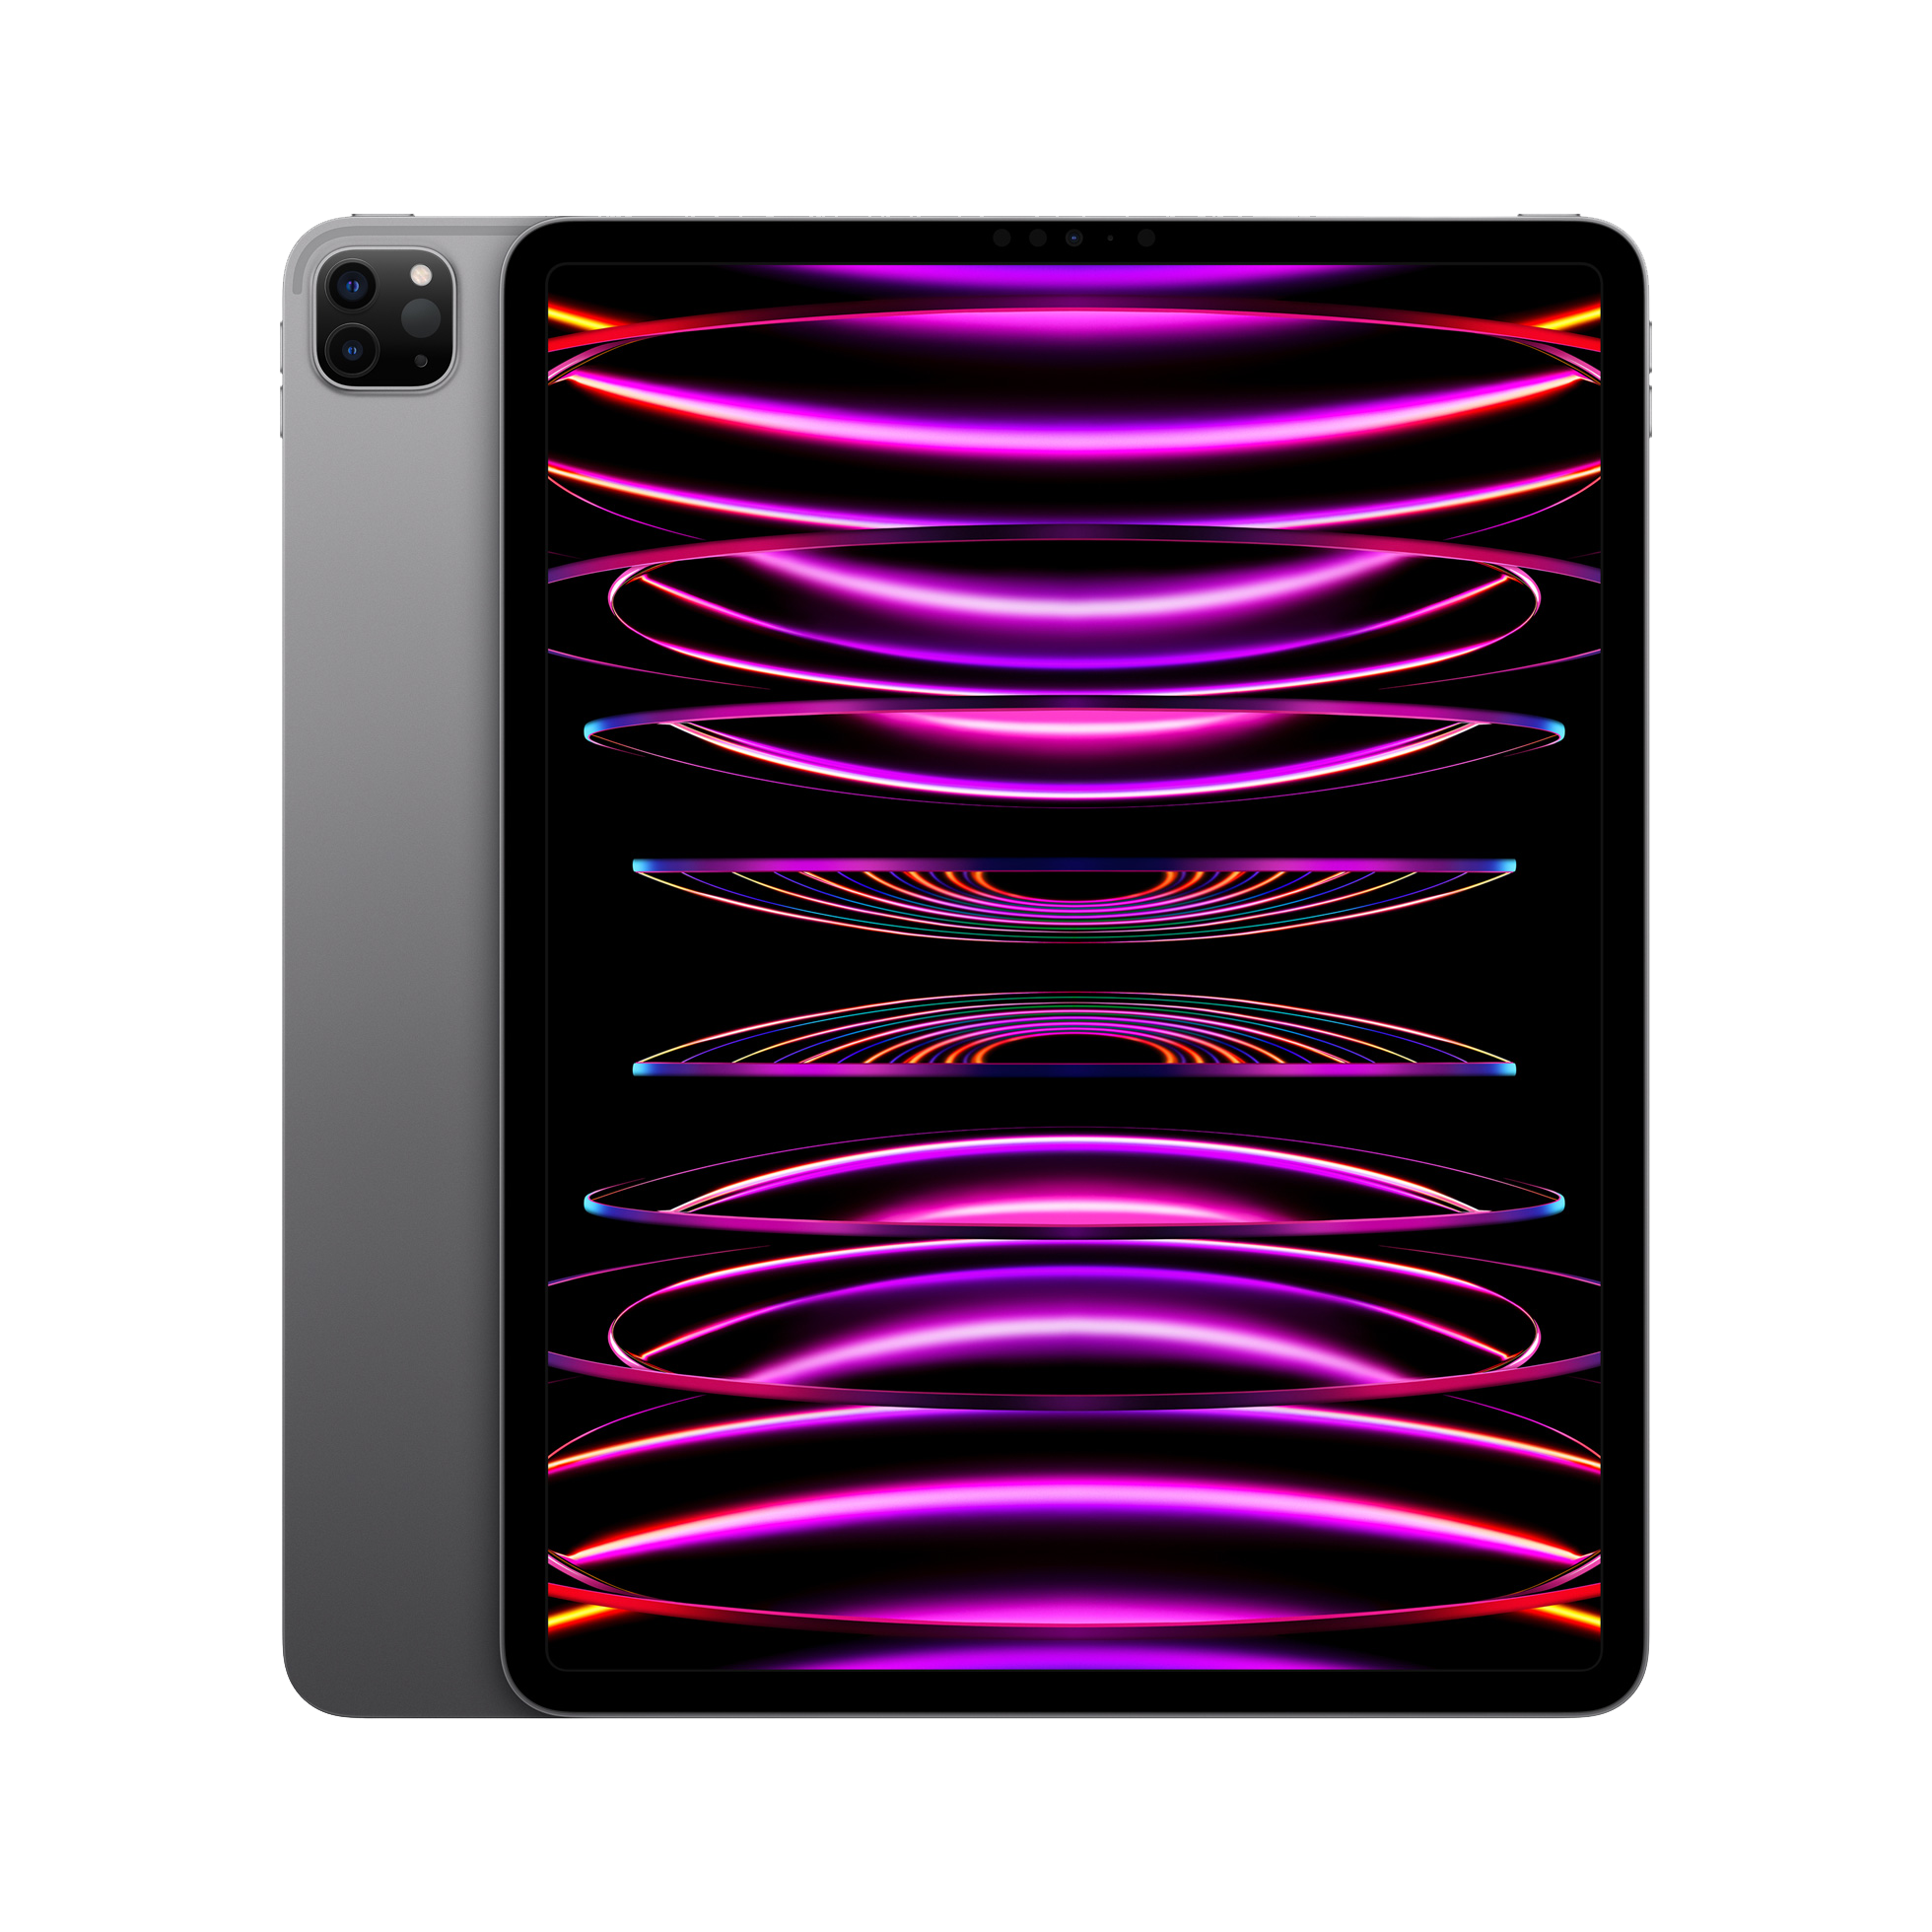 Apple iPad Mini 5 Review: Pint-Sized Powerhouse